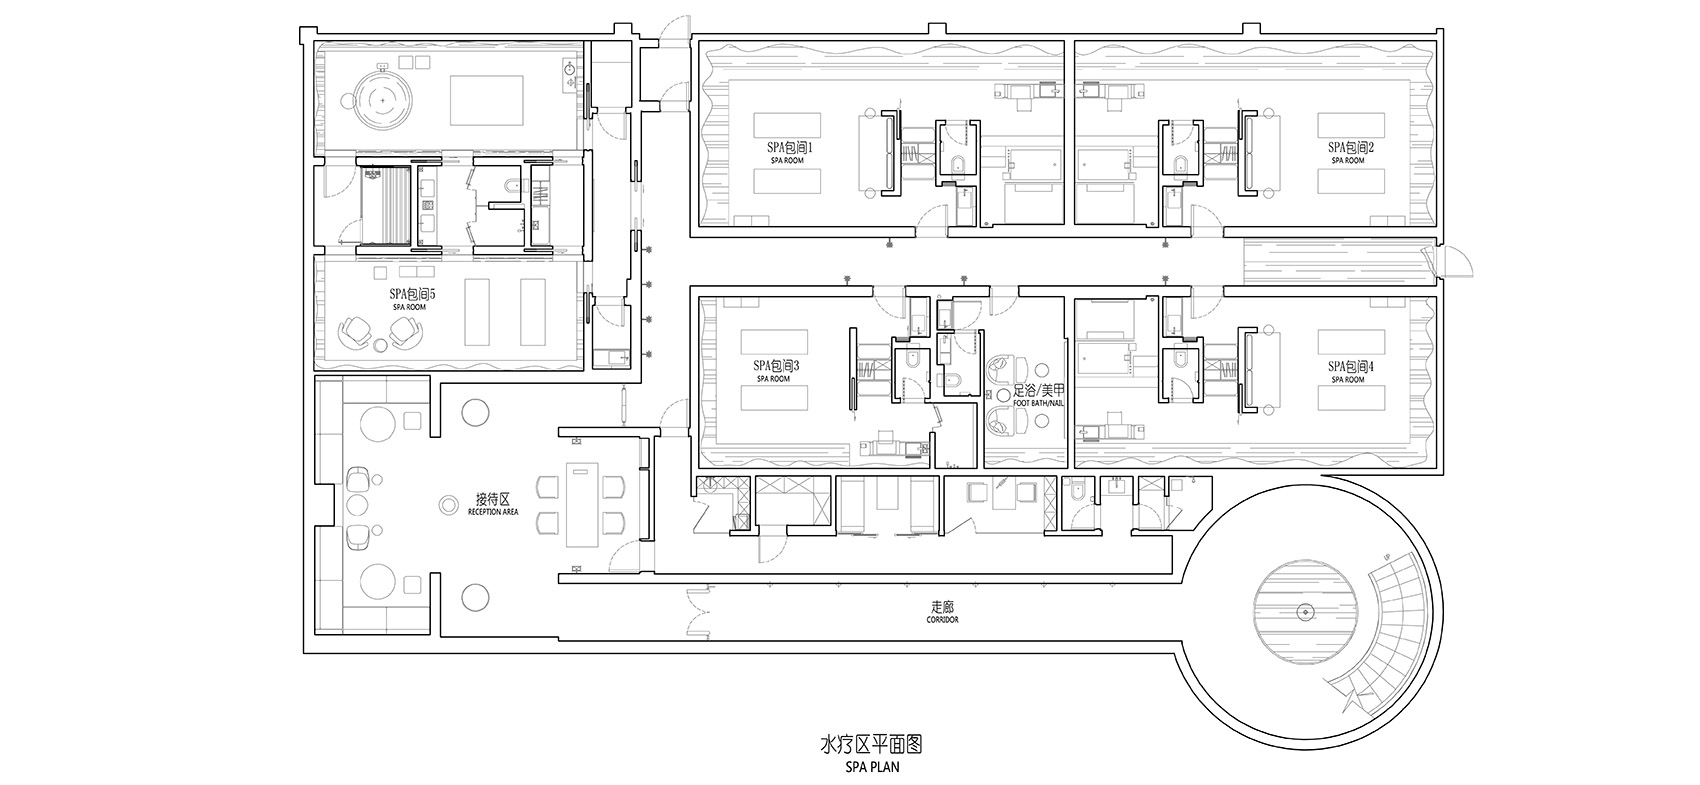 125-Interior-Design-of-Alila-Yangshuo-China-by-Horizontal-Space-Design.jpg